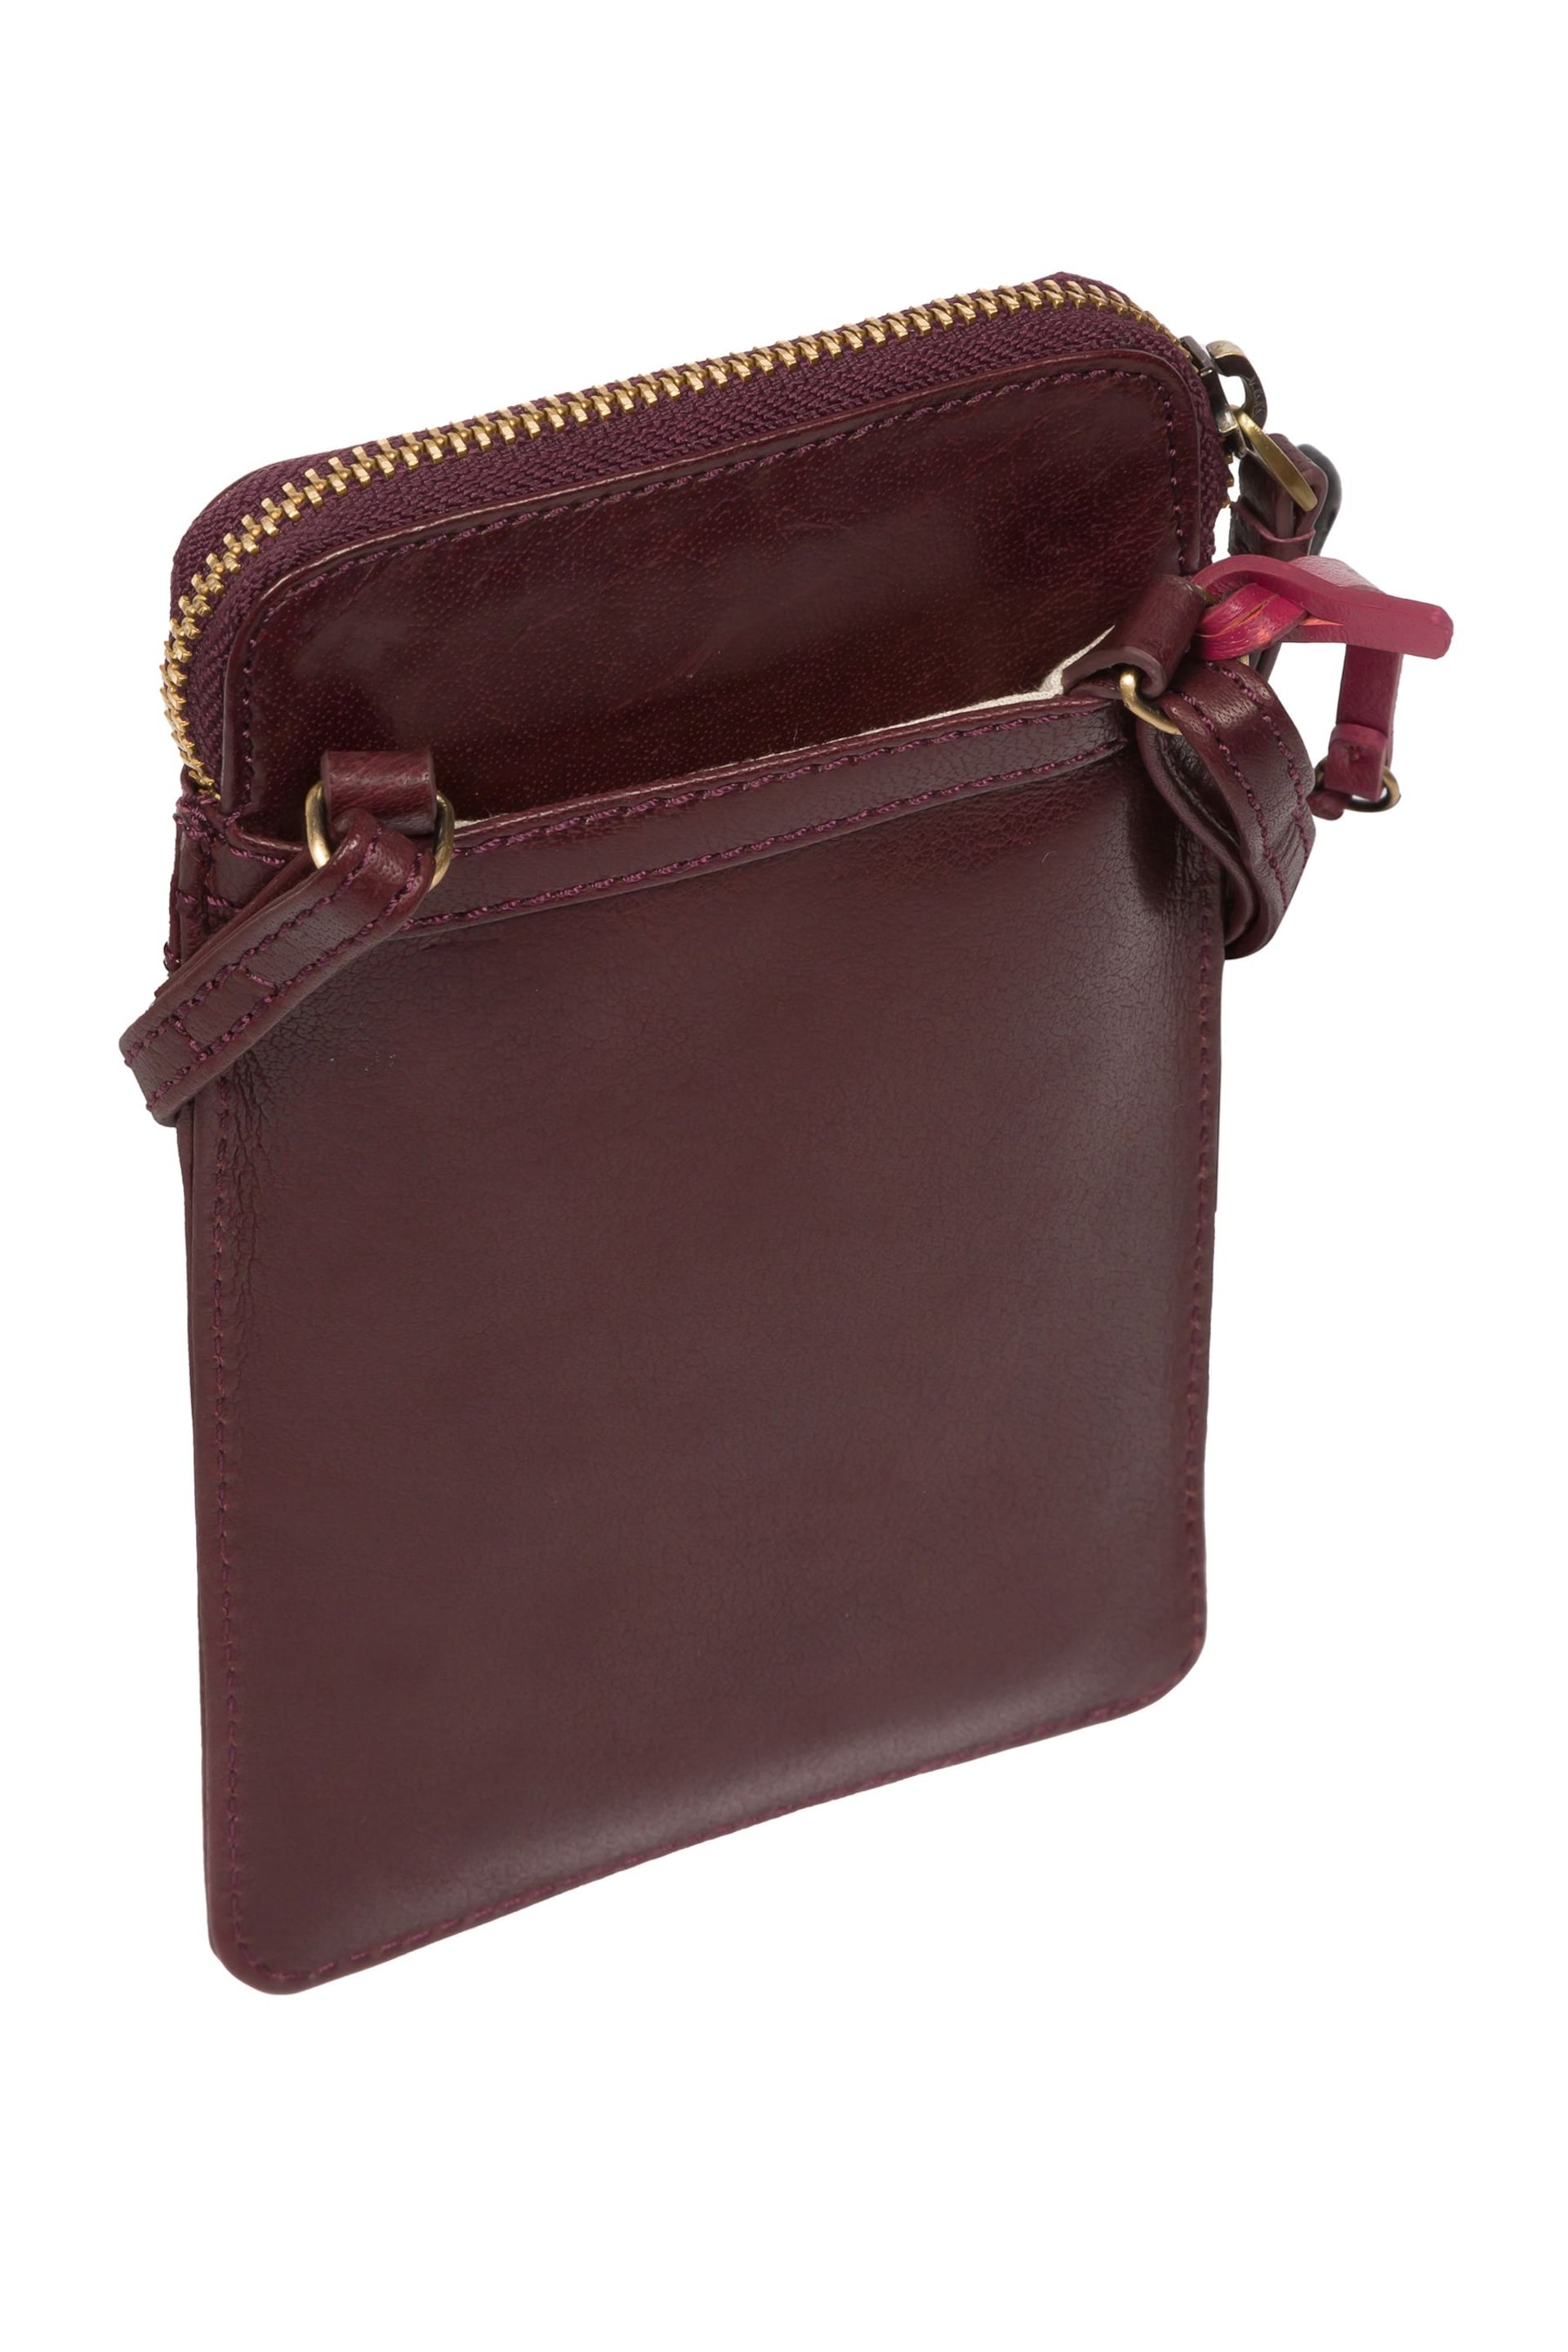 Conkca Bambino Leather Cross-Body Phone Bag - Image 5 of 9